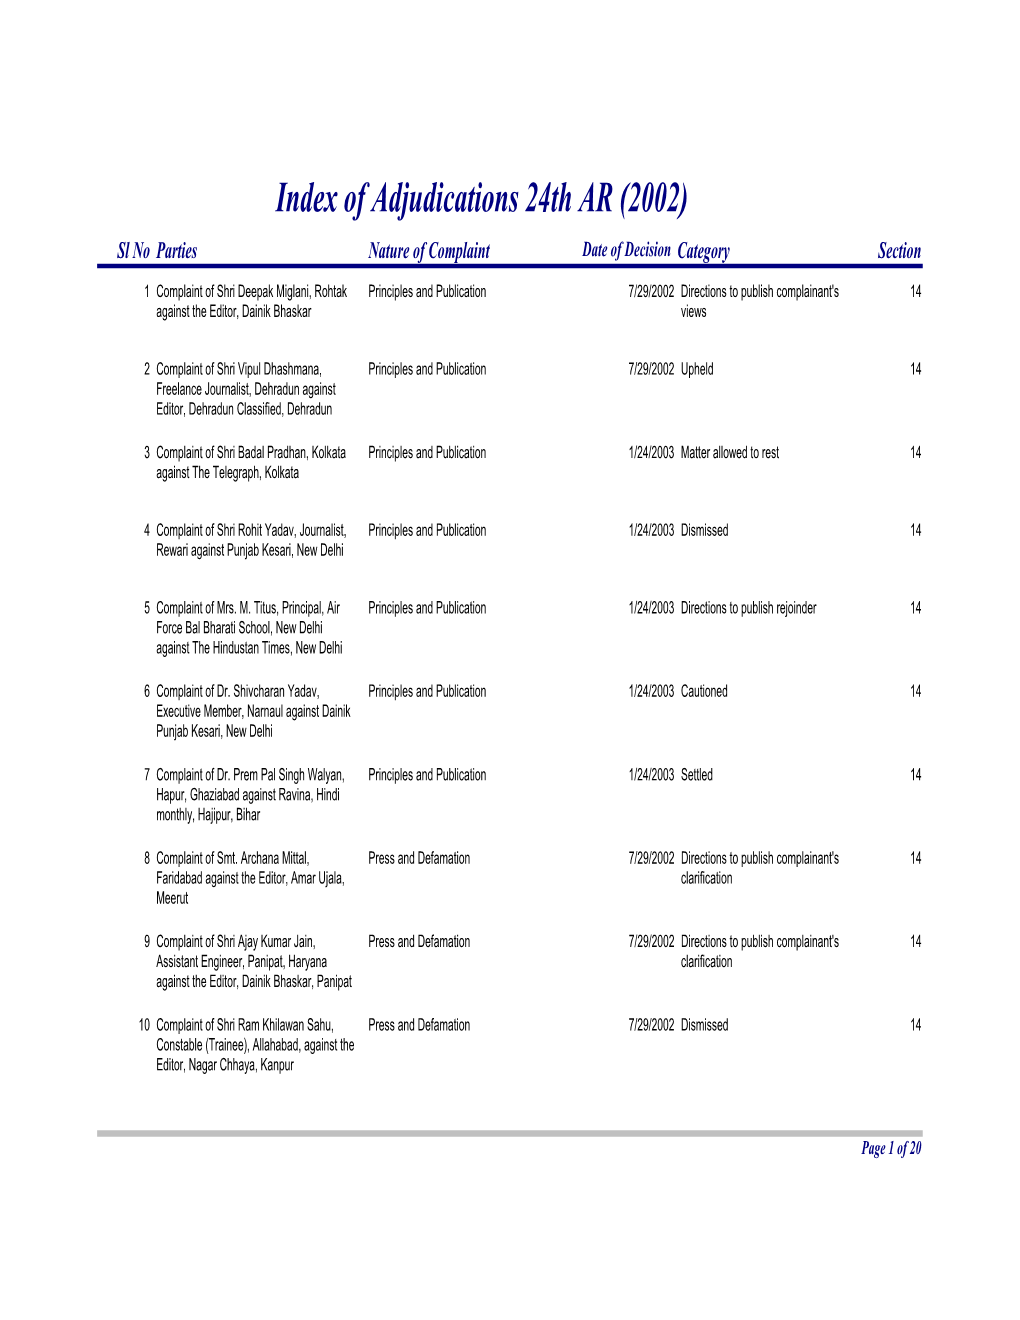 Index of Adjudications 24Th AR (2002) (Updated)